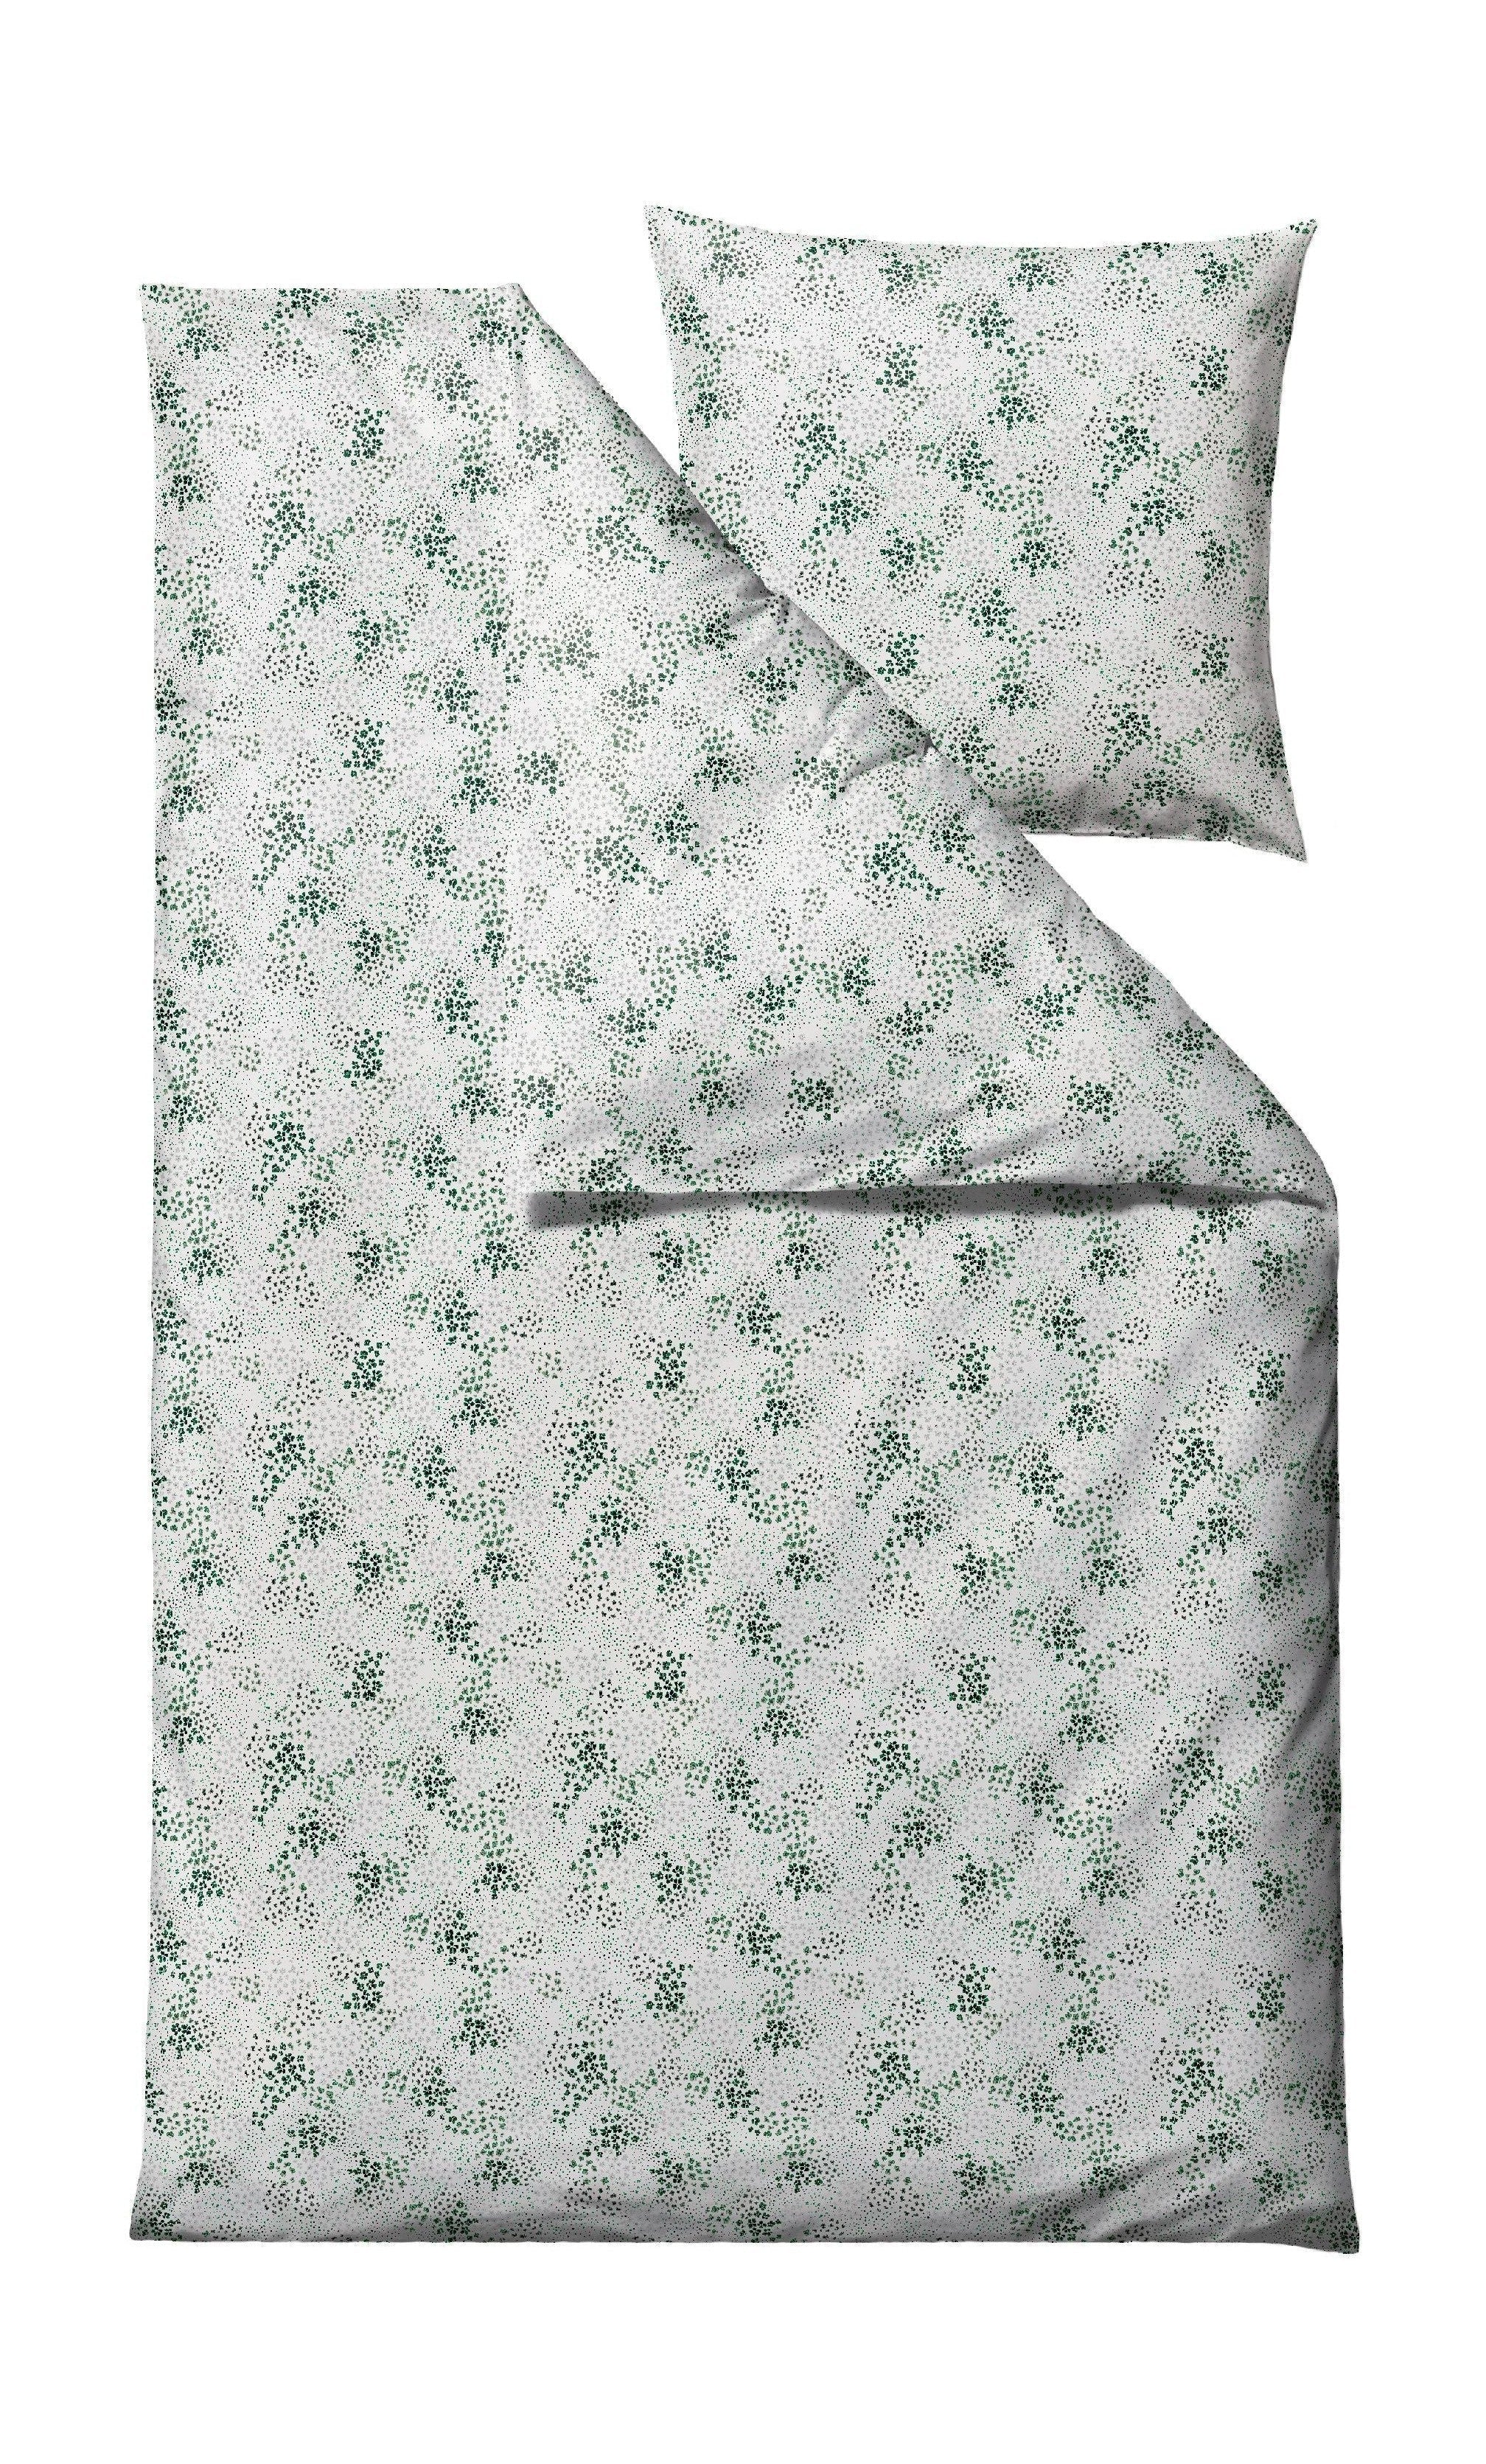 Söstahl viola sängkläder 140 x 200 cm, grönt